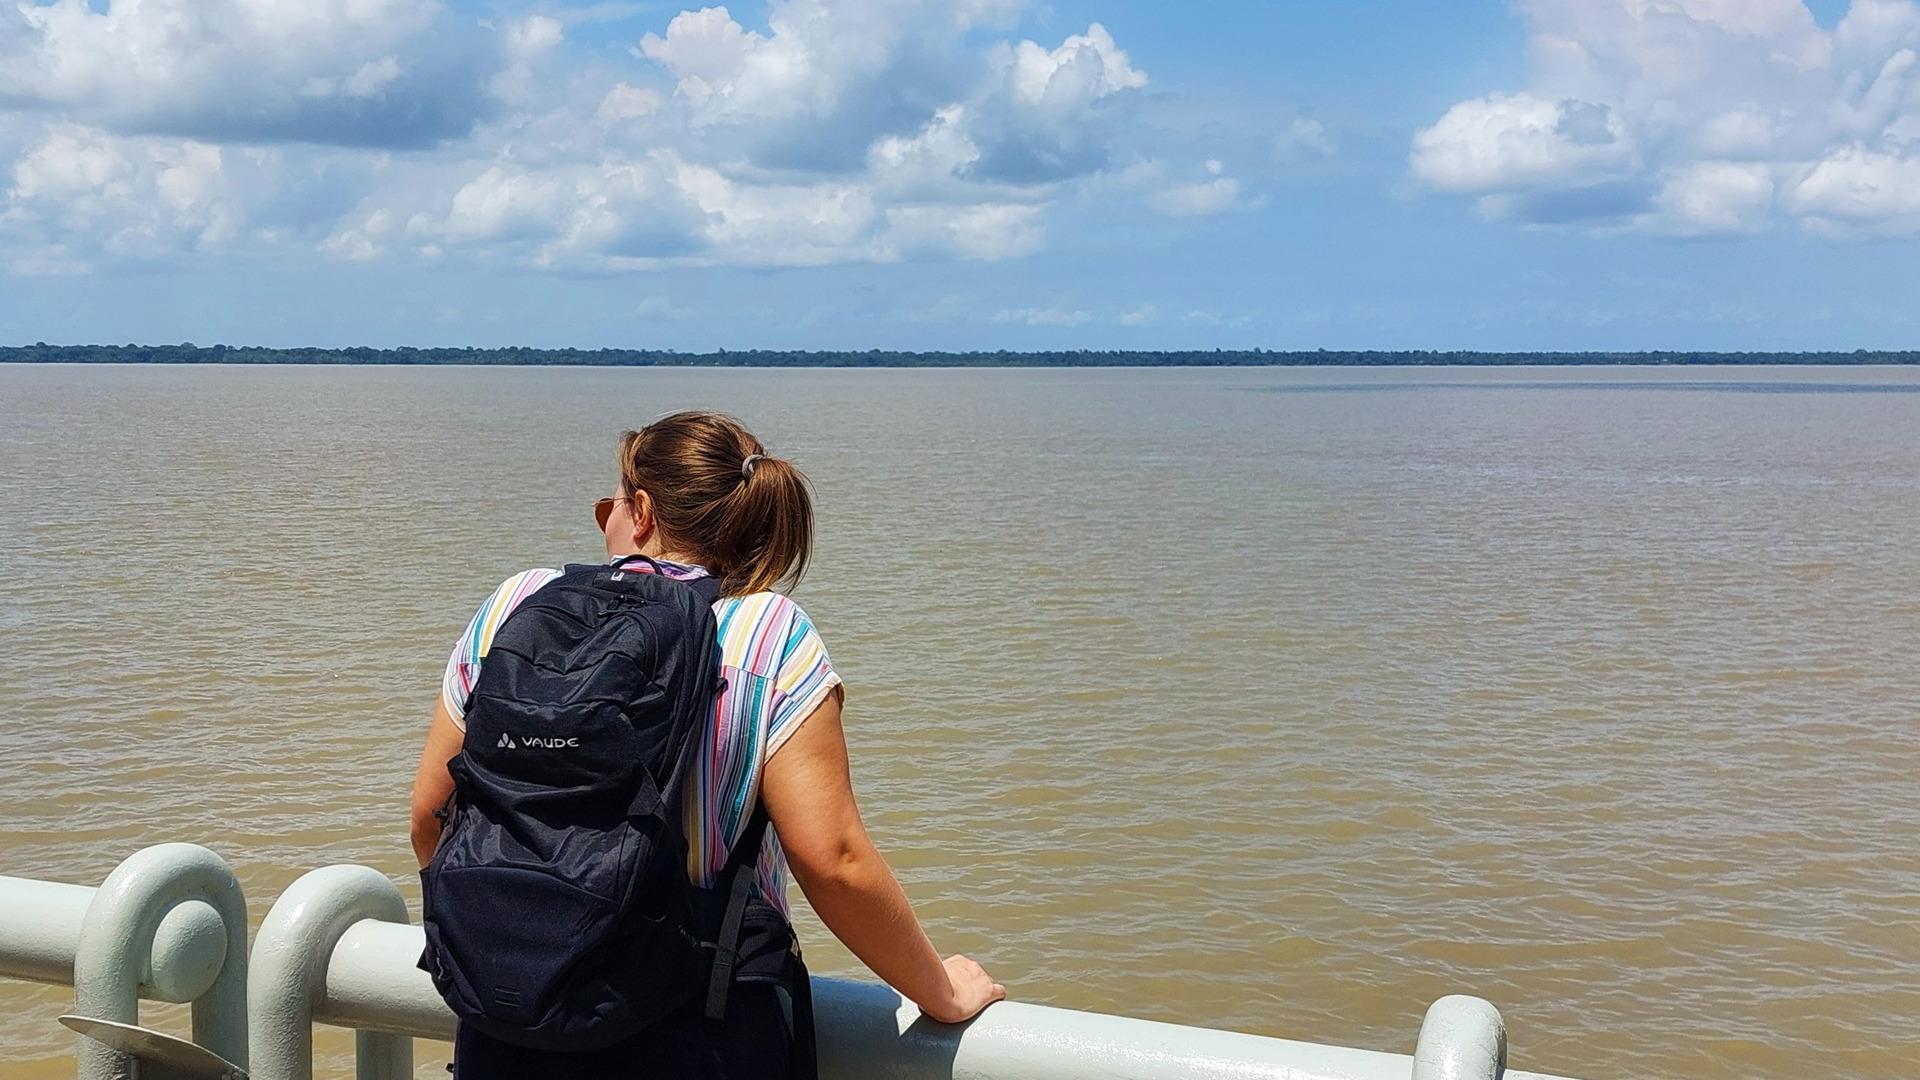 Shannen looking at the river in Belém, Brazil